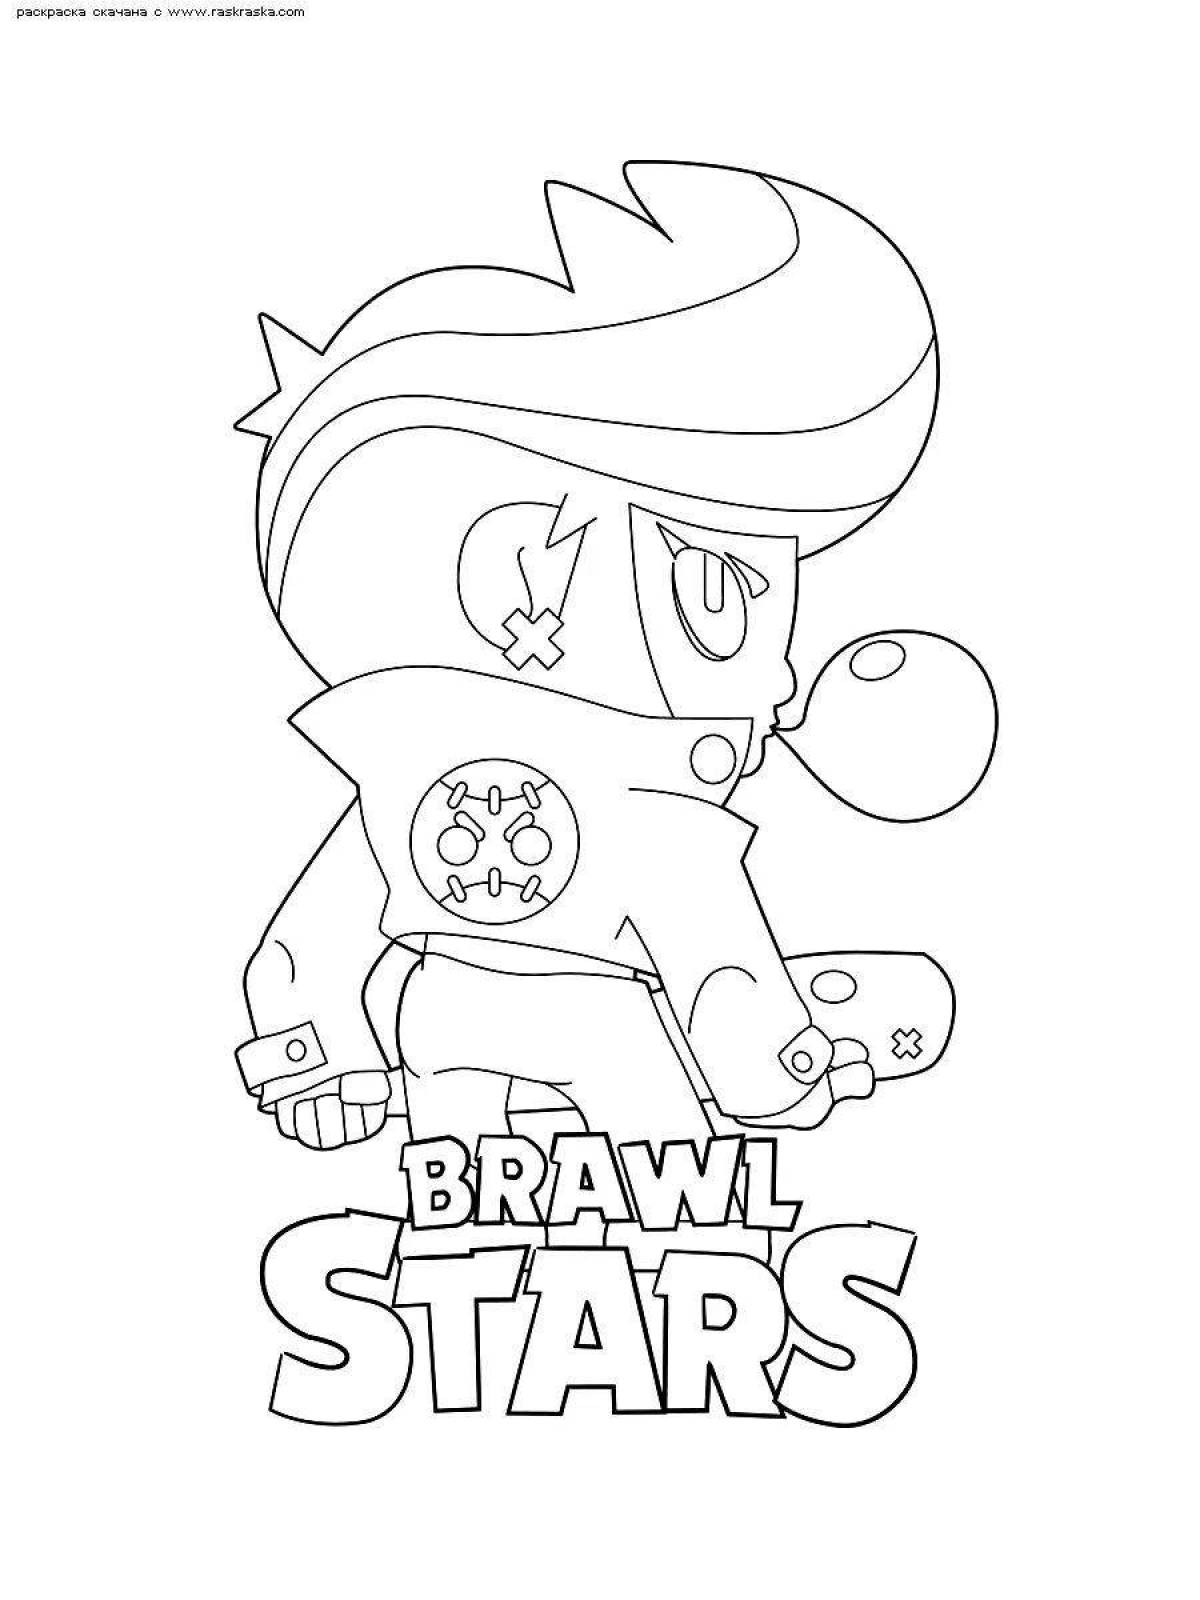 Regal bravo stars coloring page